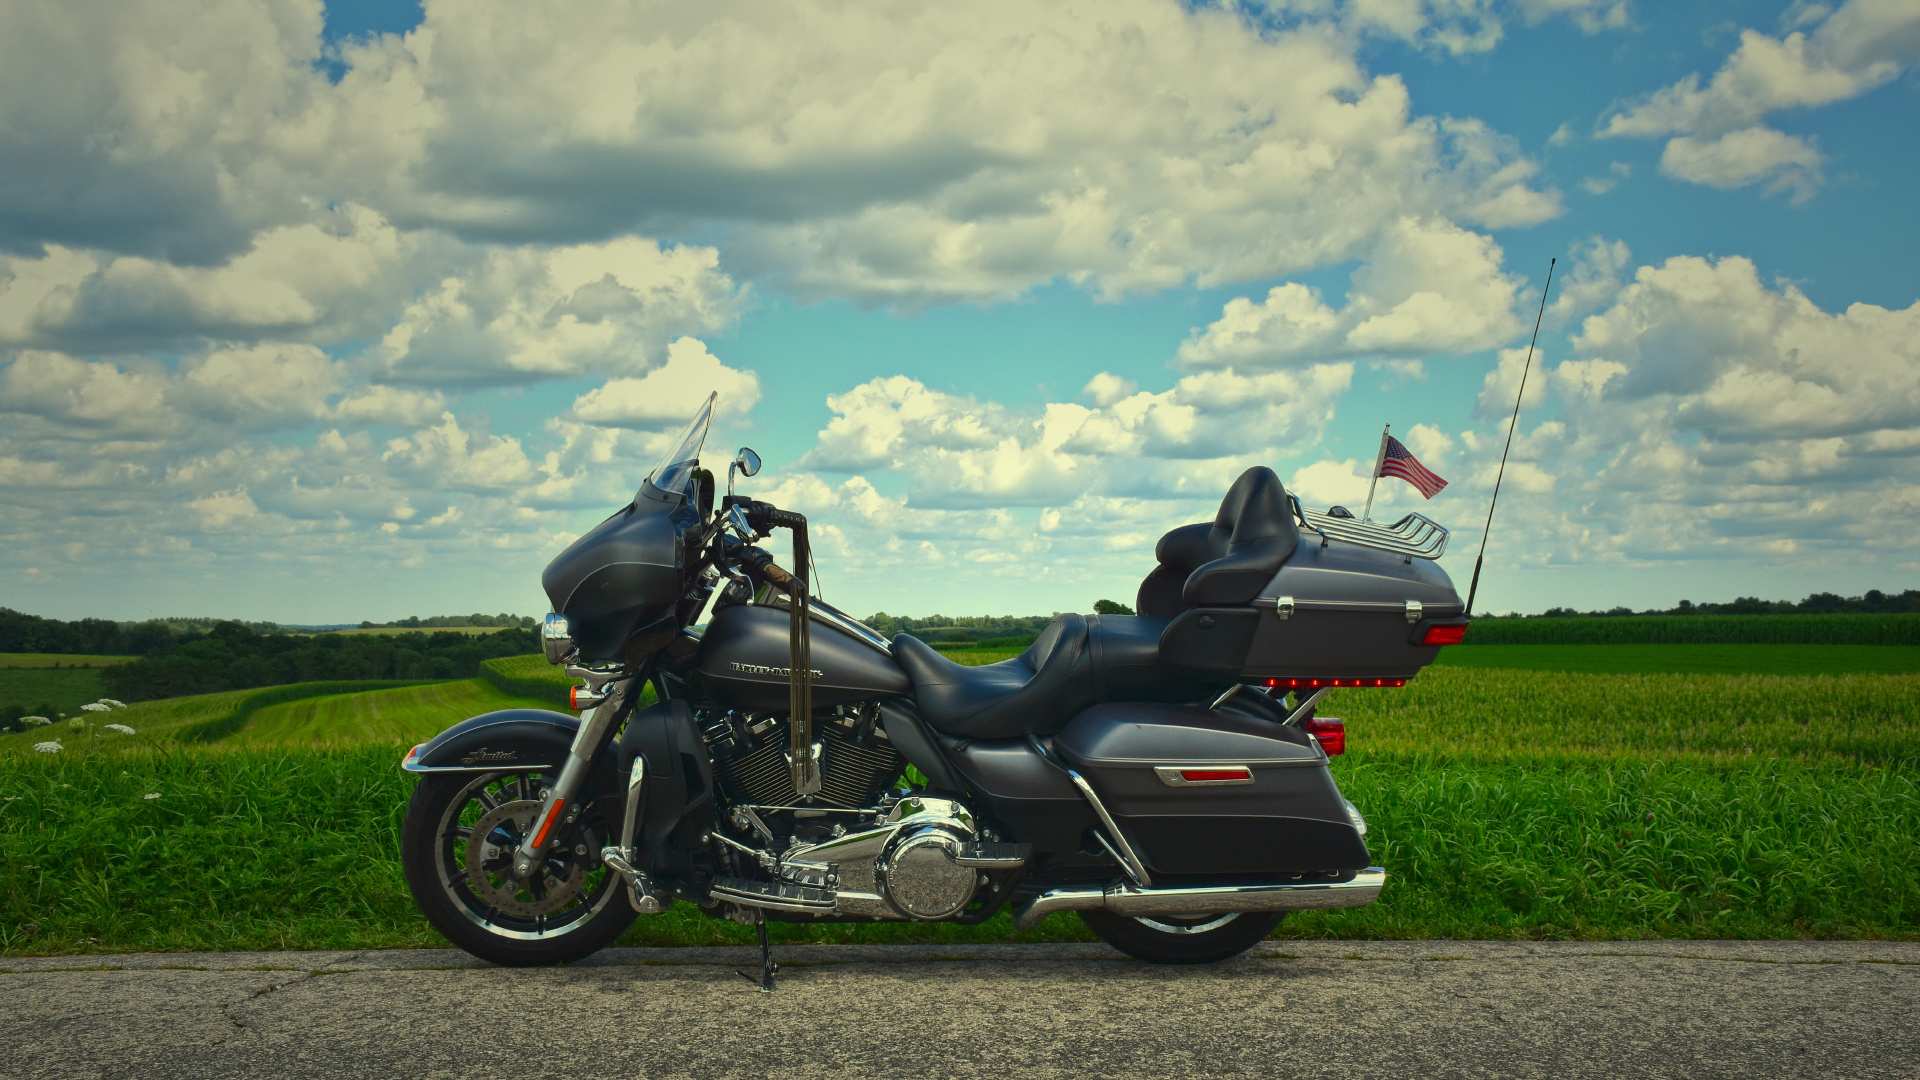 Обои мотоцикл, облако, аксессуары для мотоциклов, мотоспорт, дорога в разрешении 1920x1080